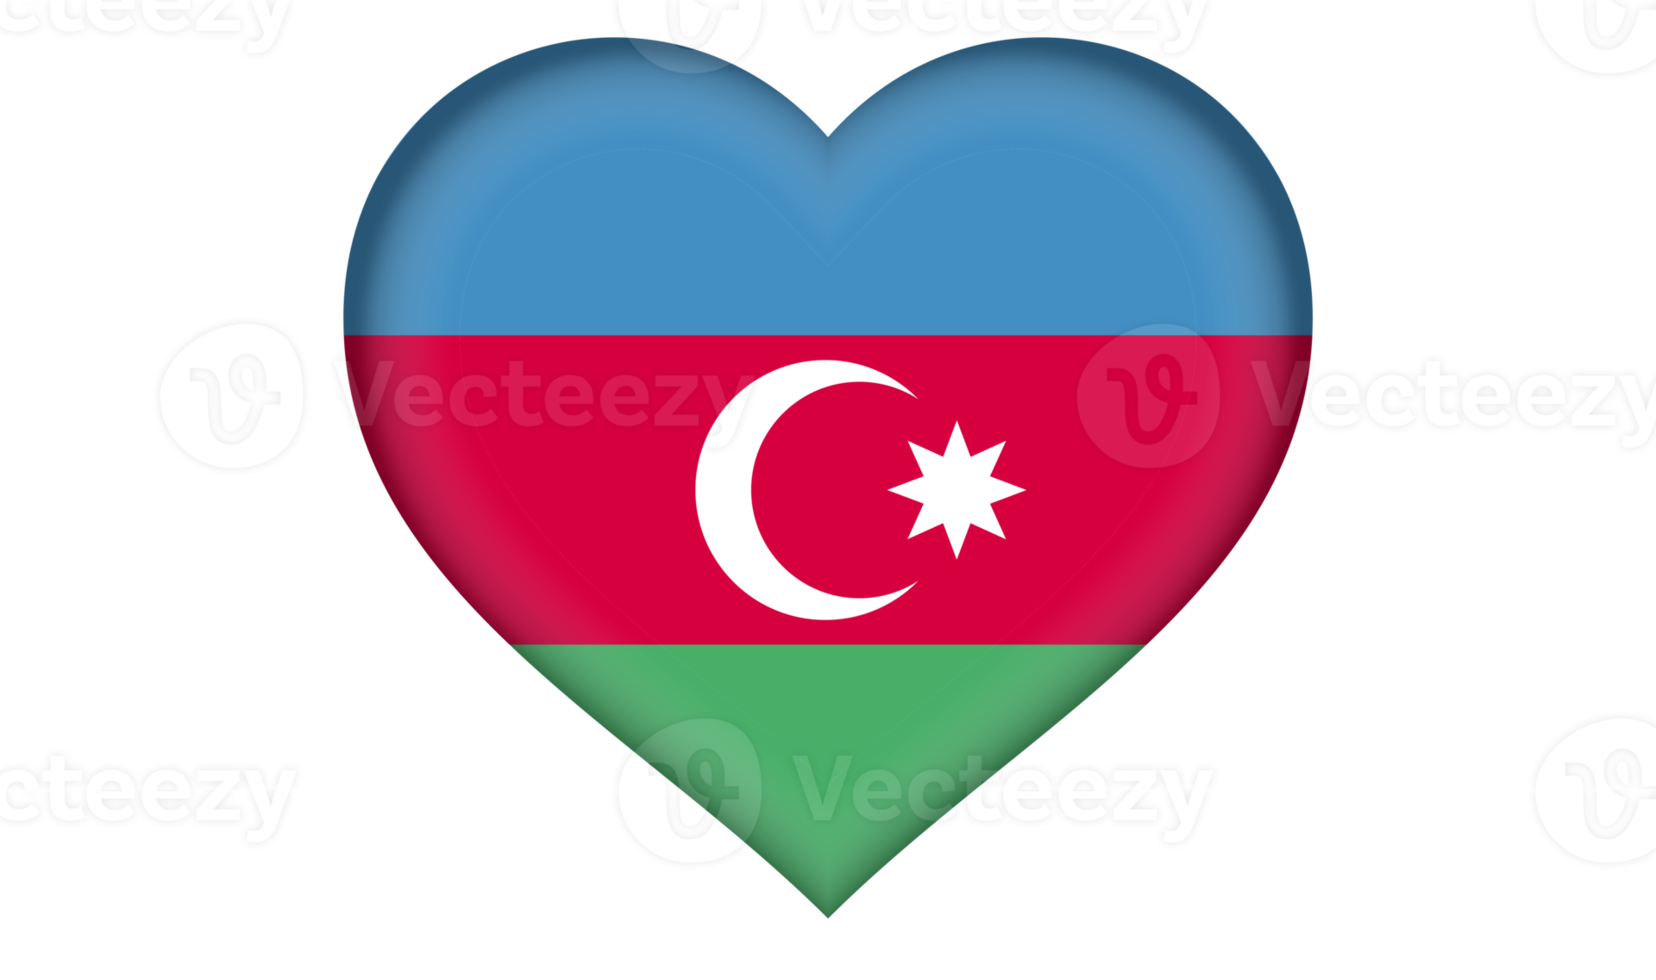 azerbaijan flagga ikon i de form en hjärta png